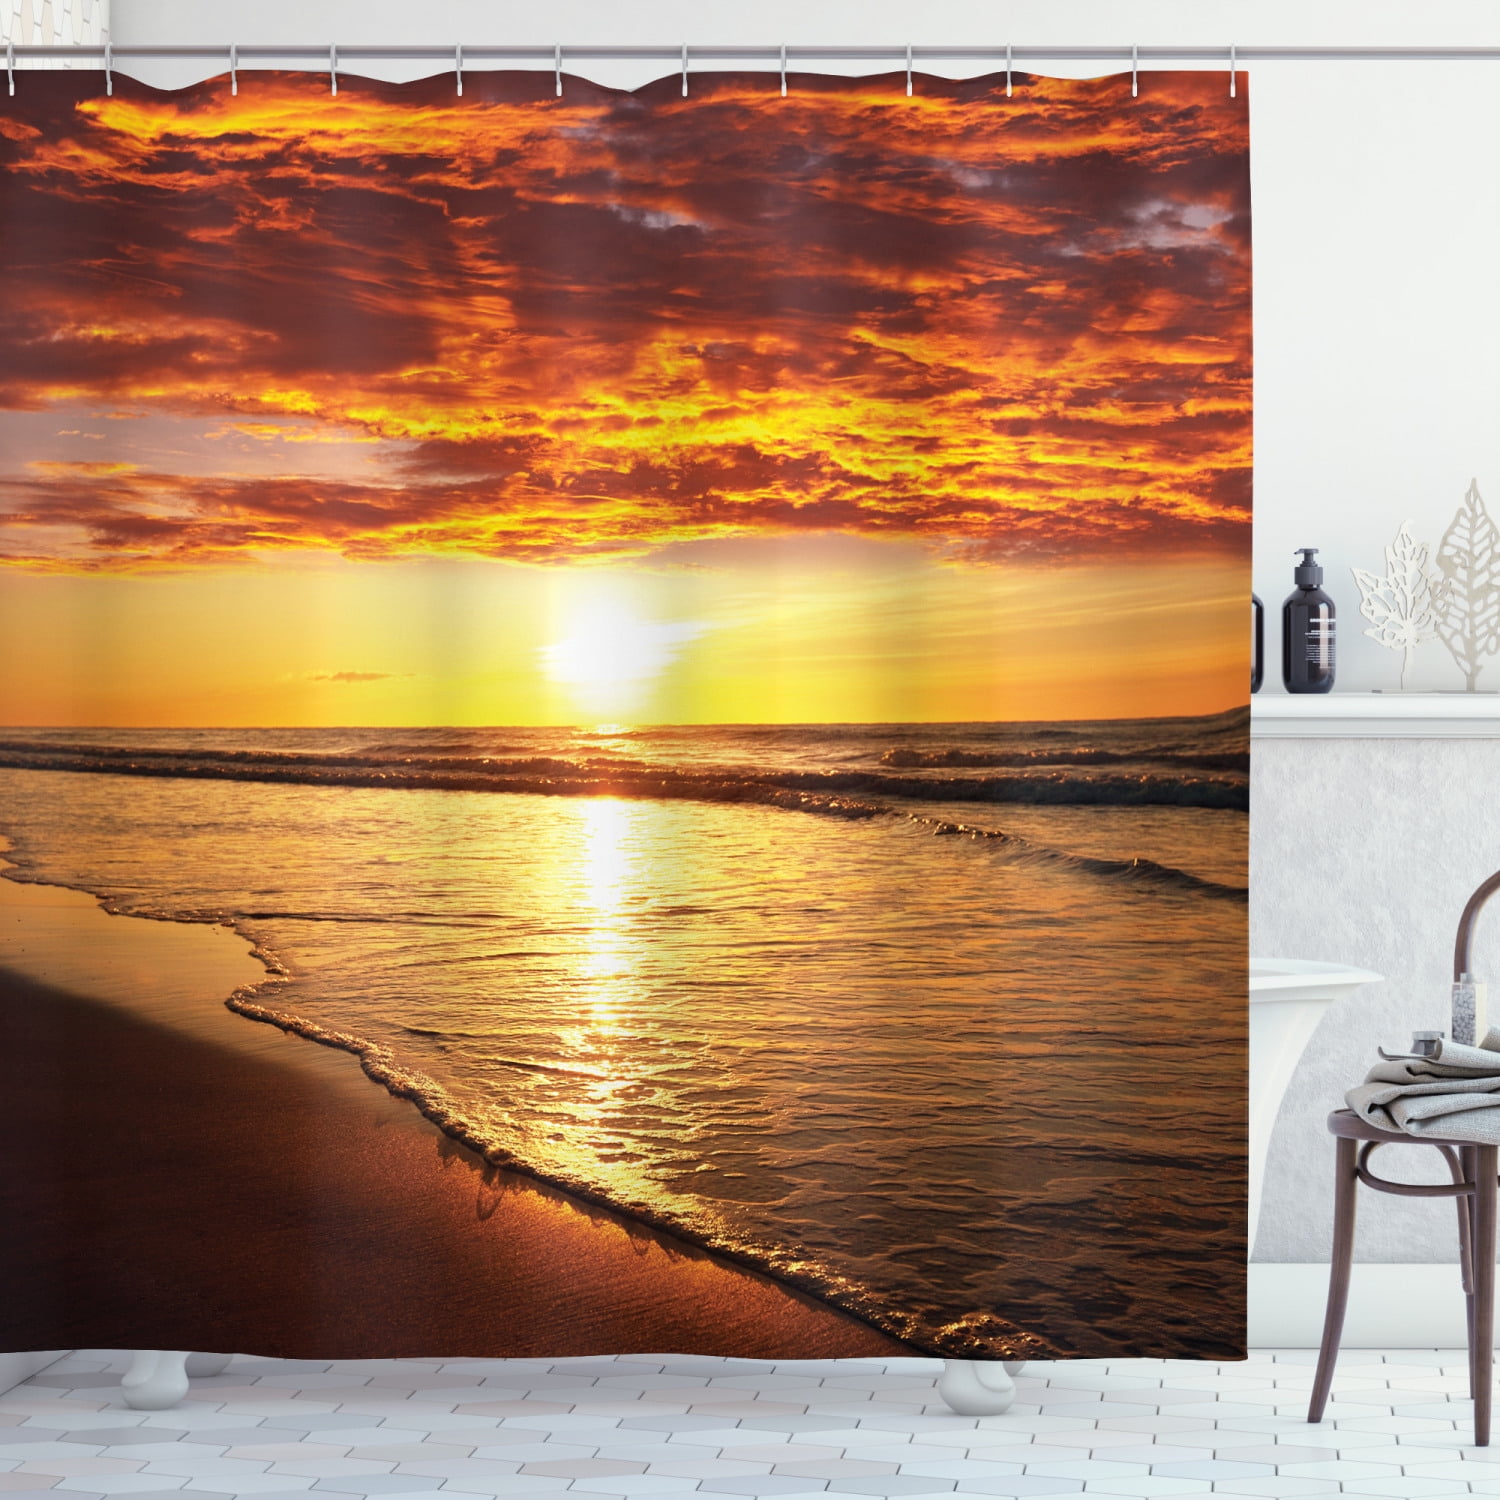 3D Blockout Photo Mural Printing Curtain Fabric Window Panels Ocean Waves Sunset 